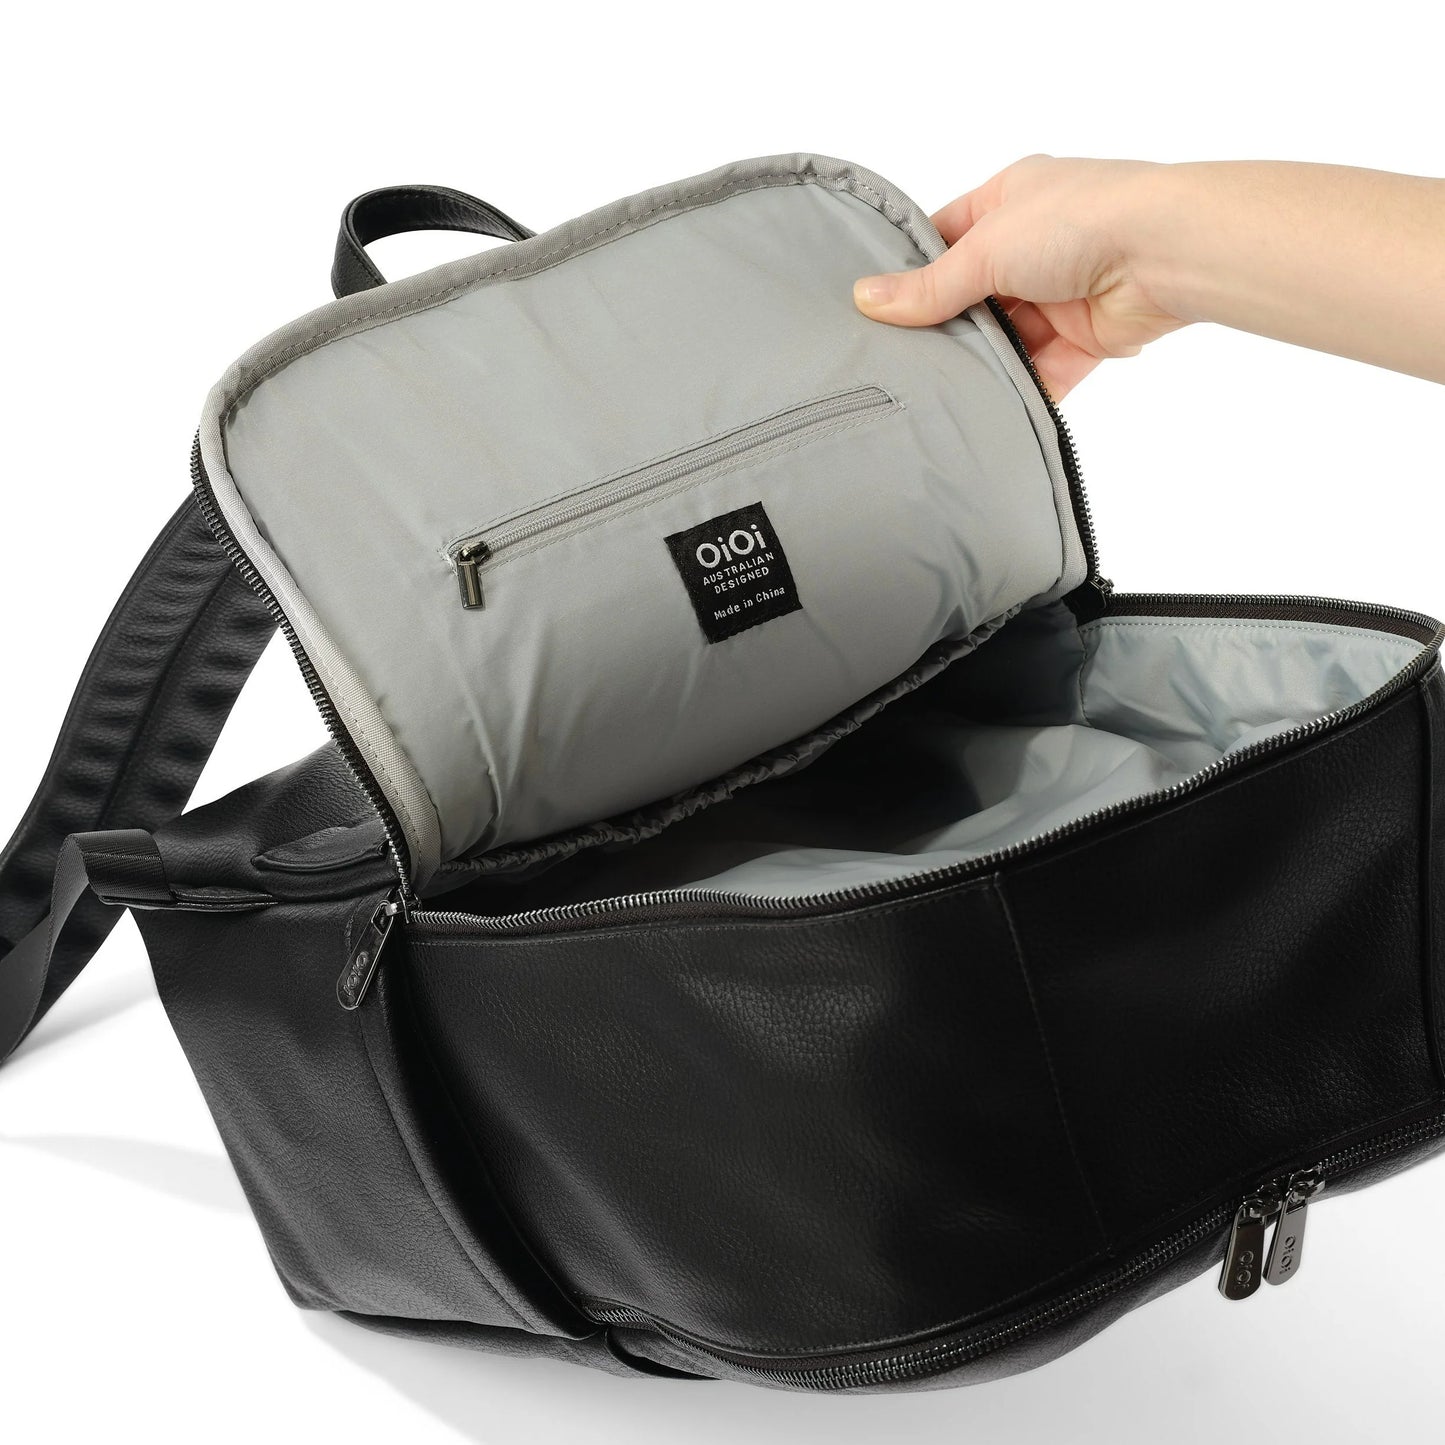 OiOi Multitasker Diaper Bag - Black